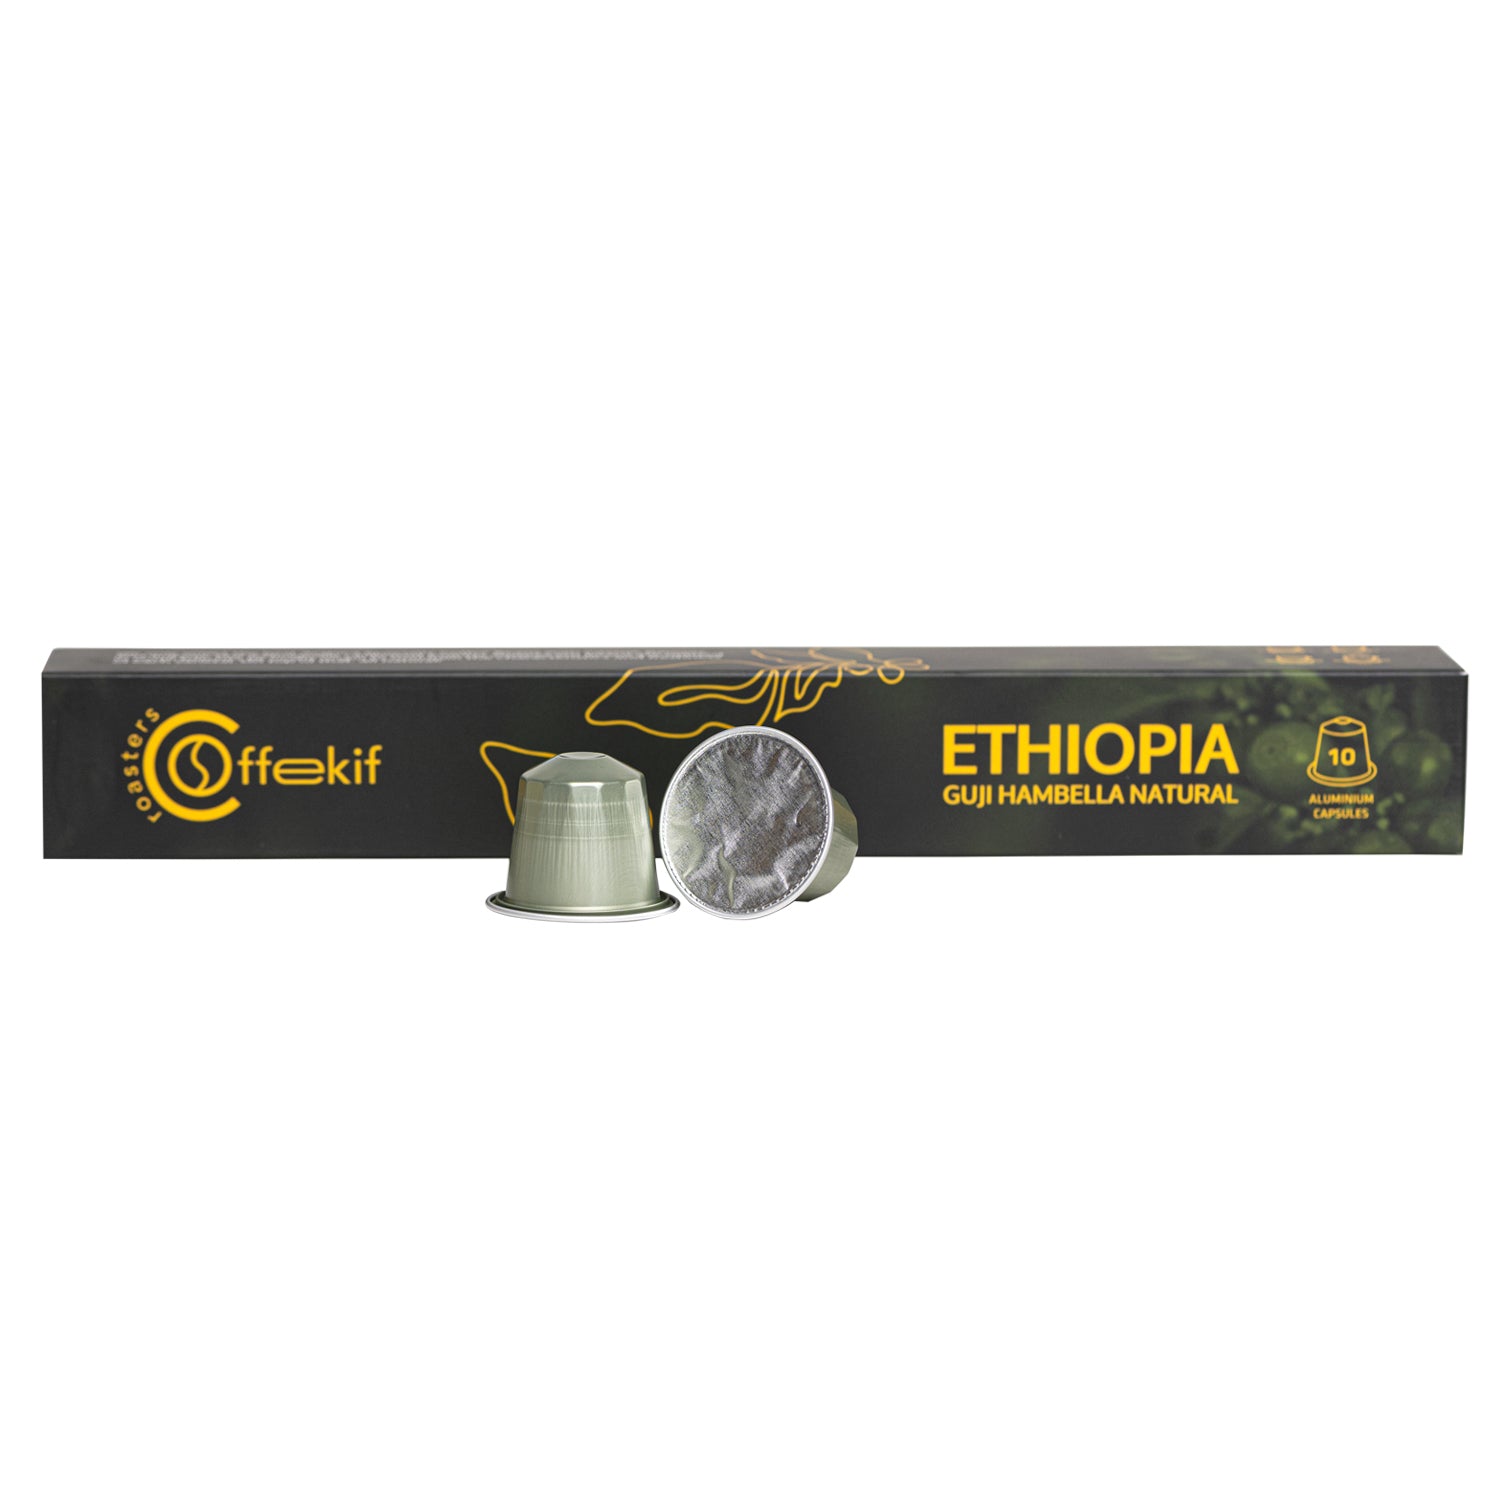 Ethiopia Coffee Capsules - Compatible with Nespresso machines